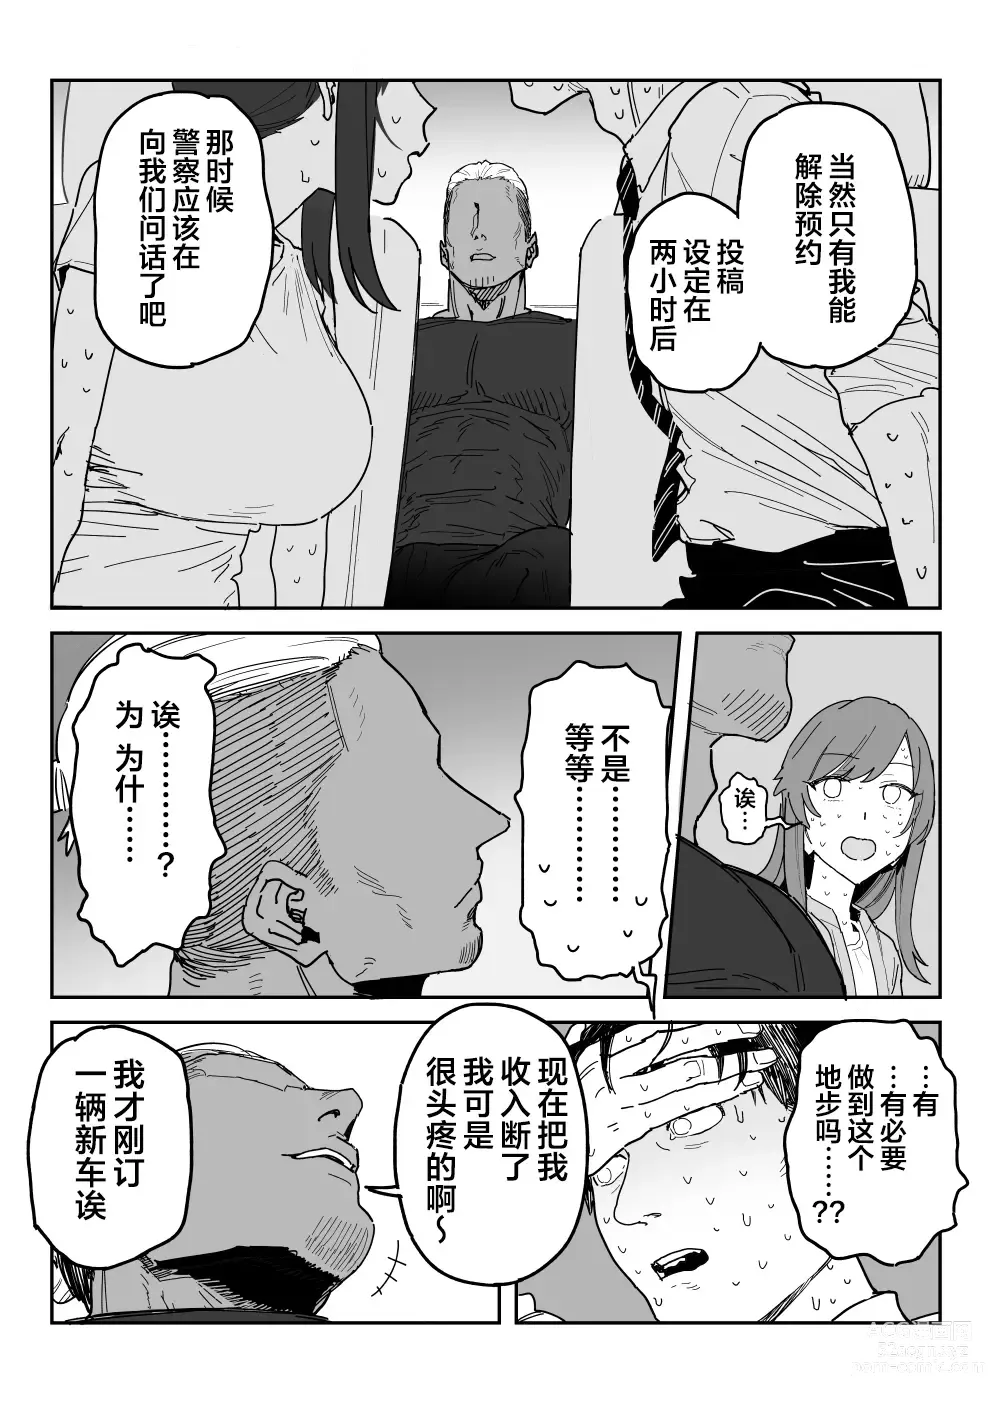 Page 11 of doujinshi 种崎佳织(39岁)代替女儿同人AV出道